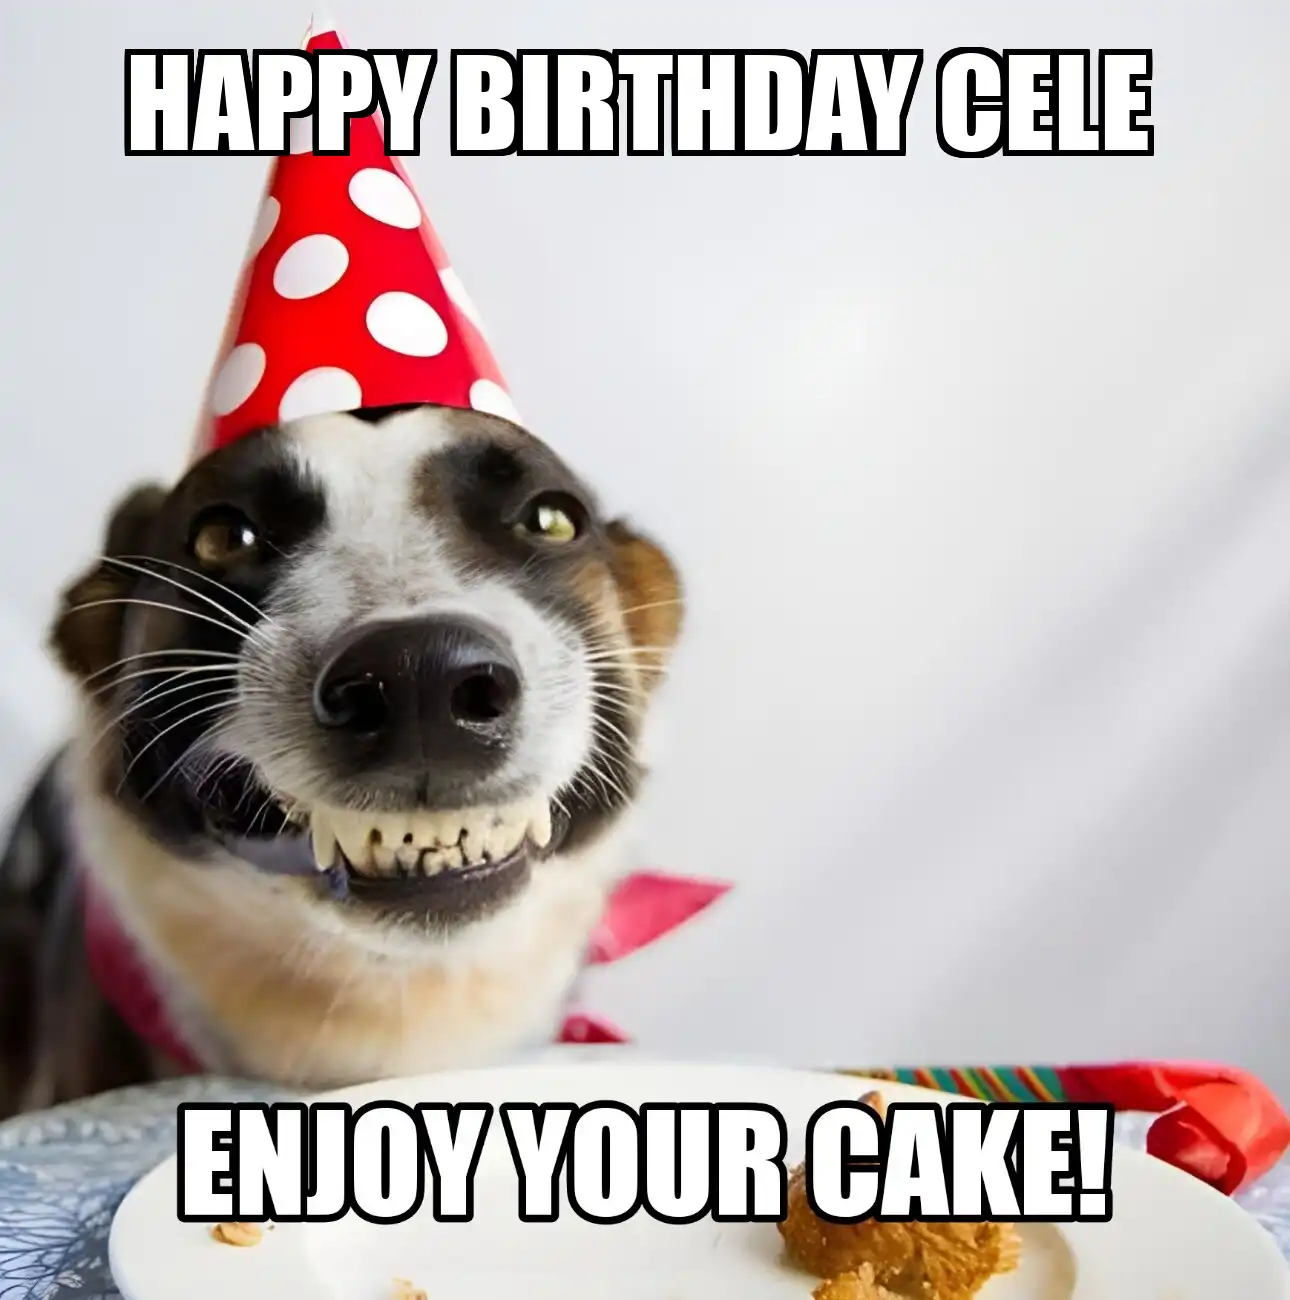 Happy Birthday Cele Enjoy Your Cake Dog Meme